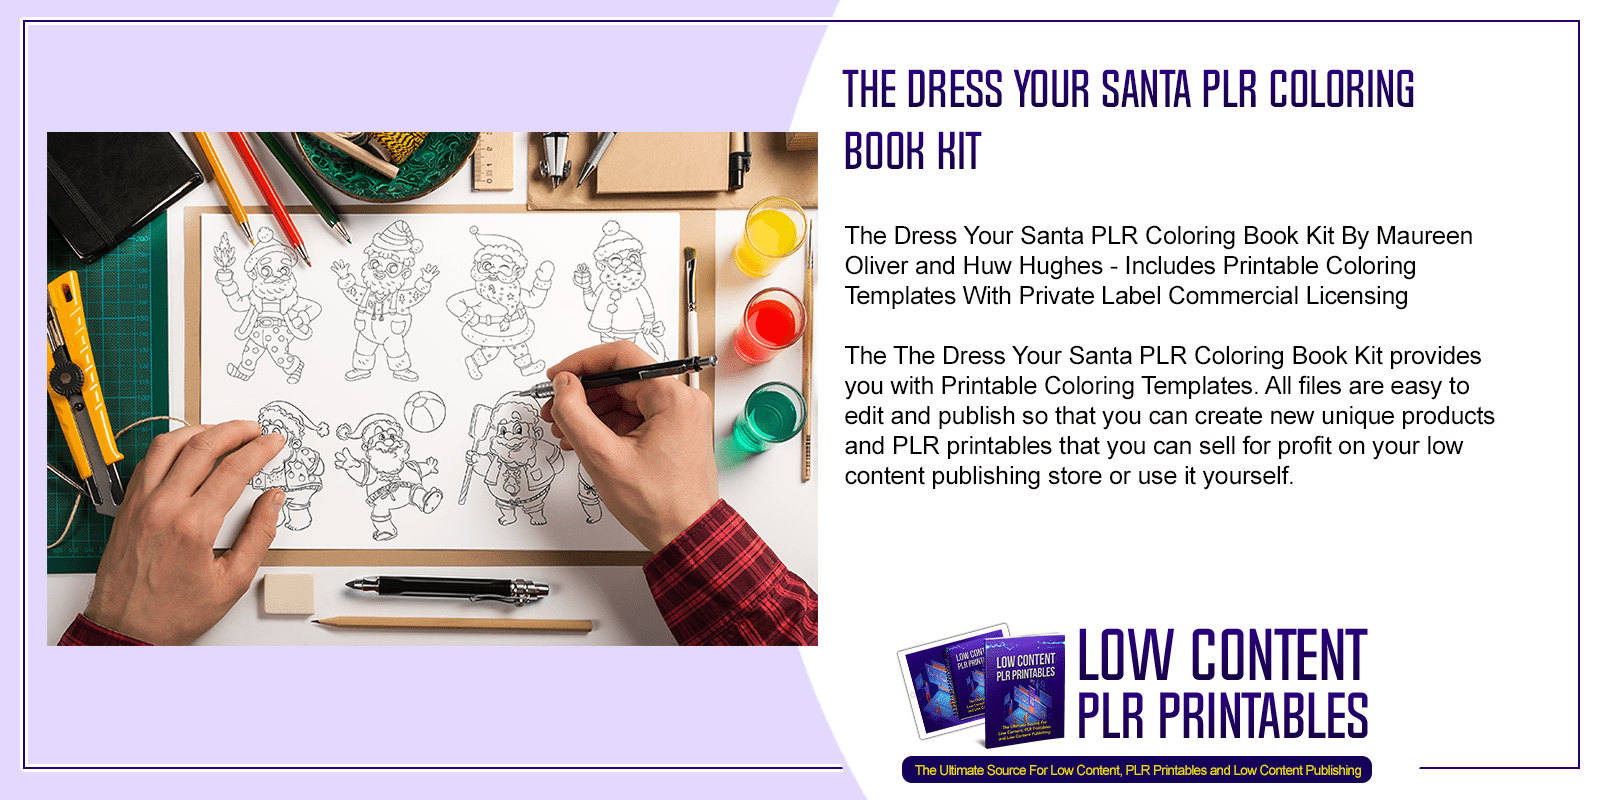 The Dress Your Santa PLR Coloring Book Kit